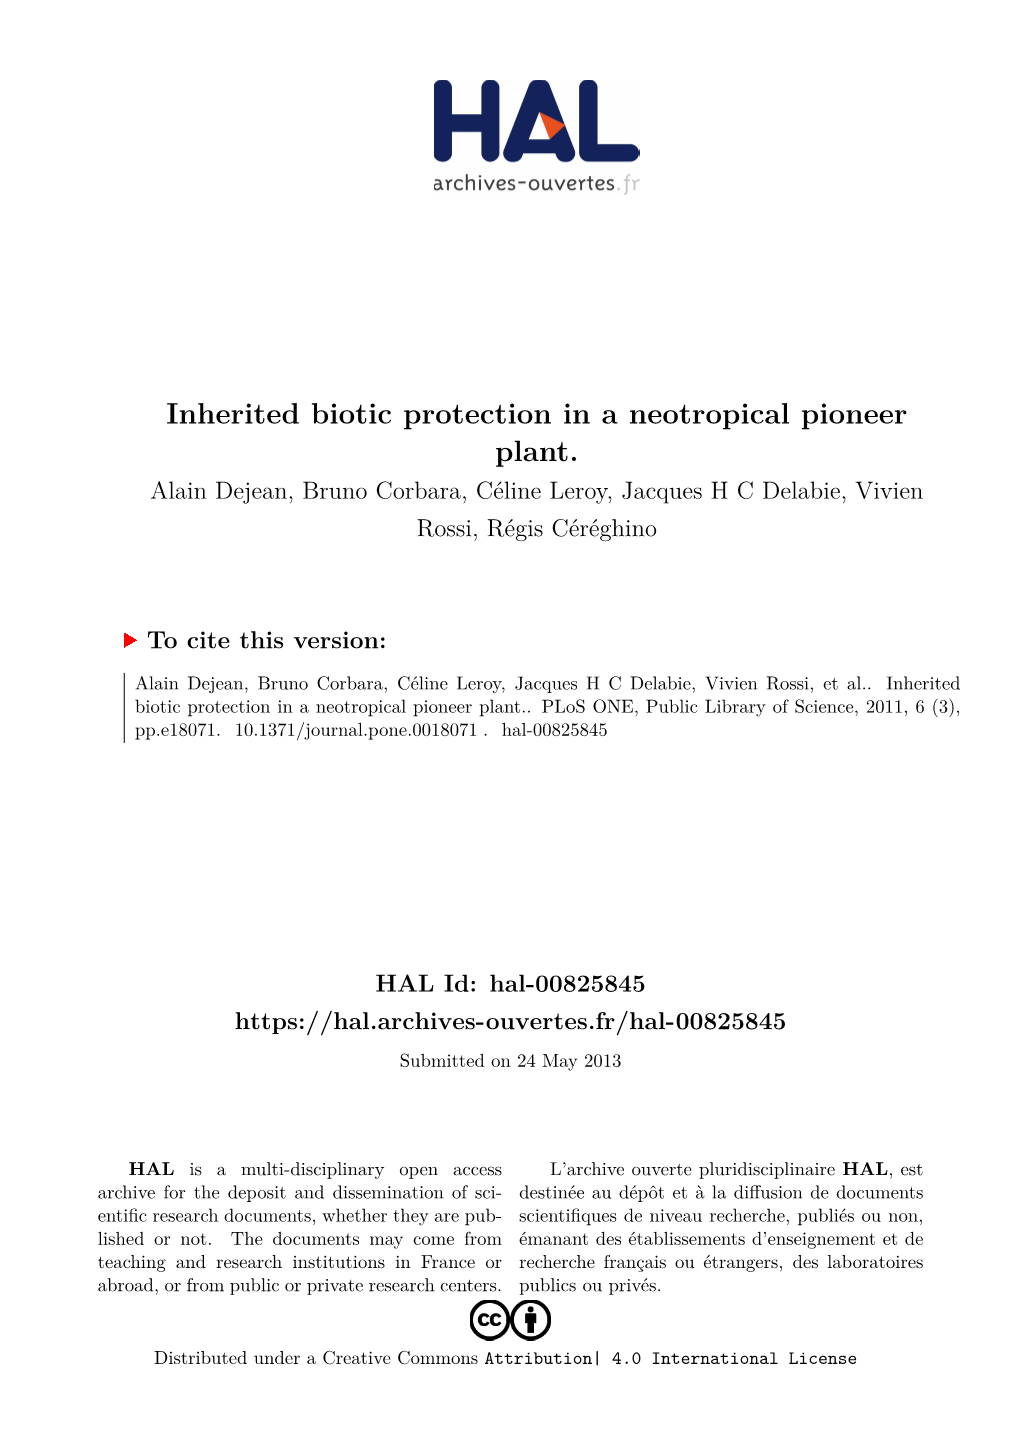 Inherited Biotic Protection in a Neotropical Pioneer Plant. Alain Dejean, Bruno Corbara, Céline Leroy, Jacques H C Delabie, Vivien Rossi, Régis Céréghino